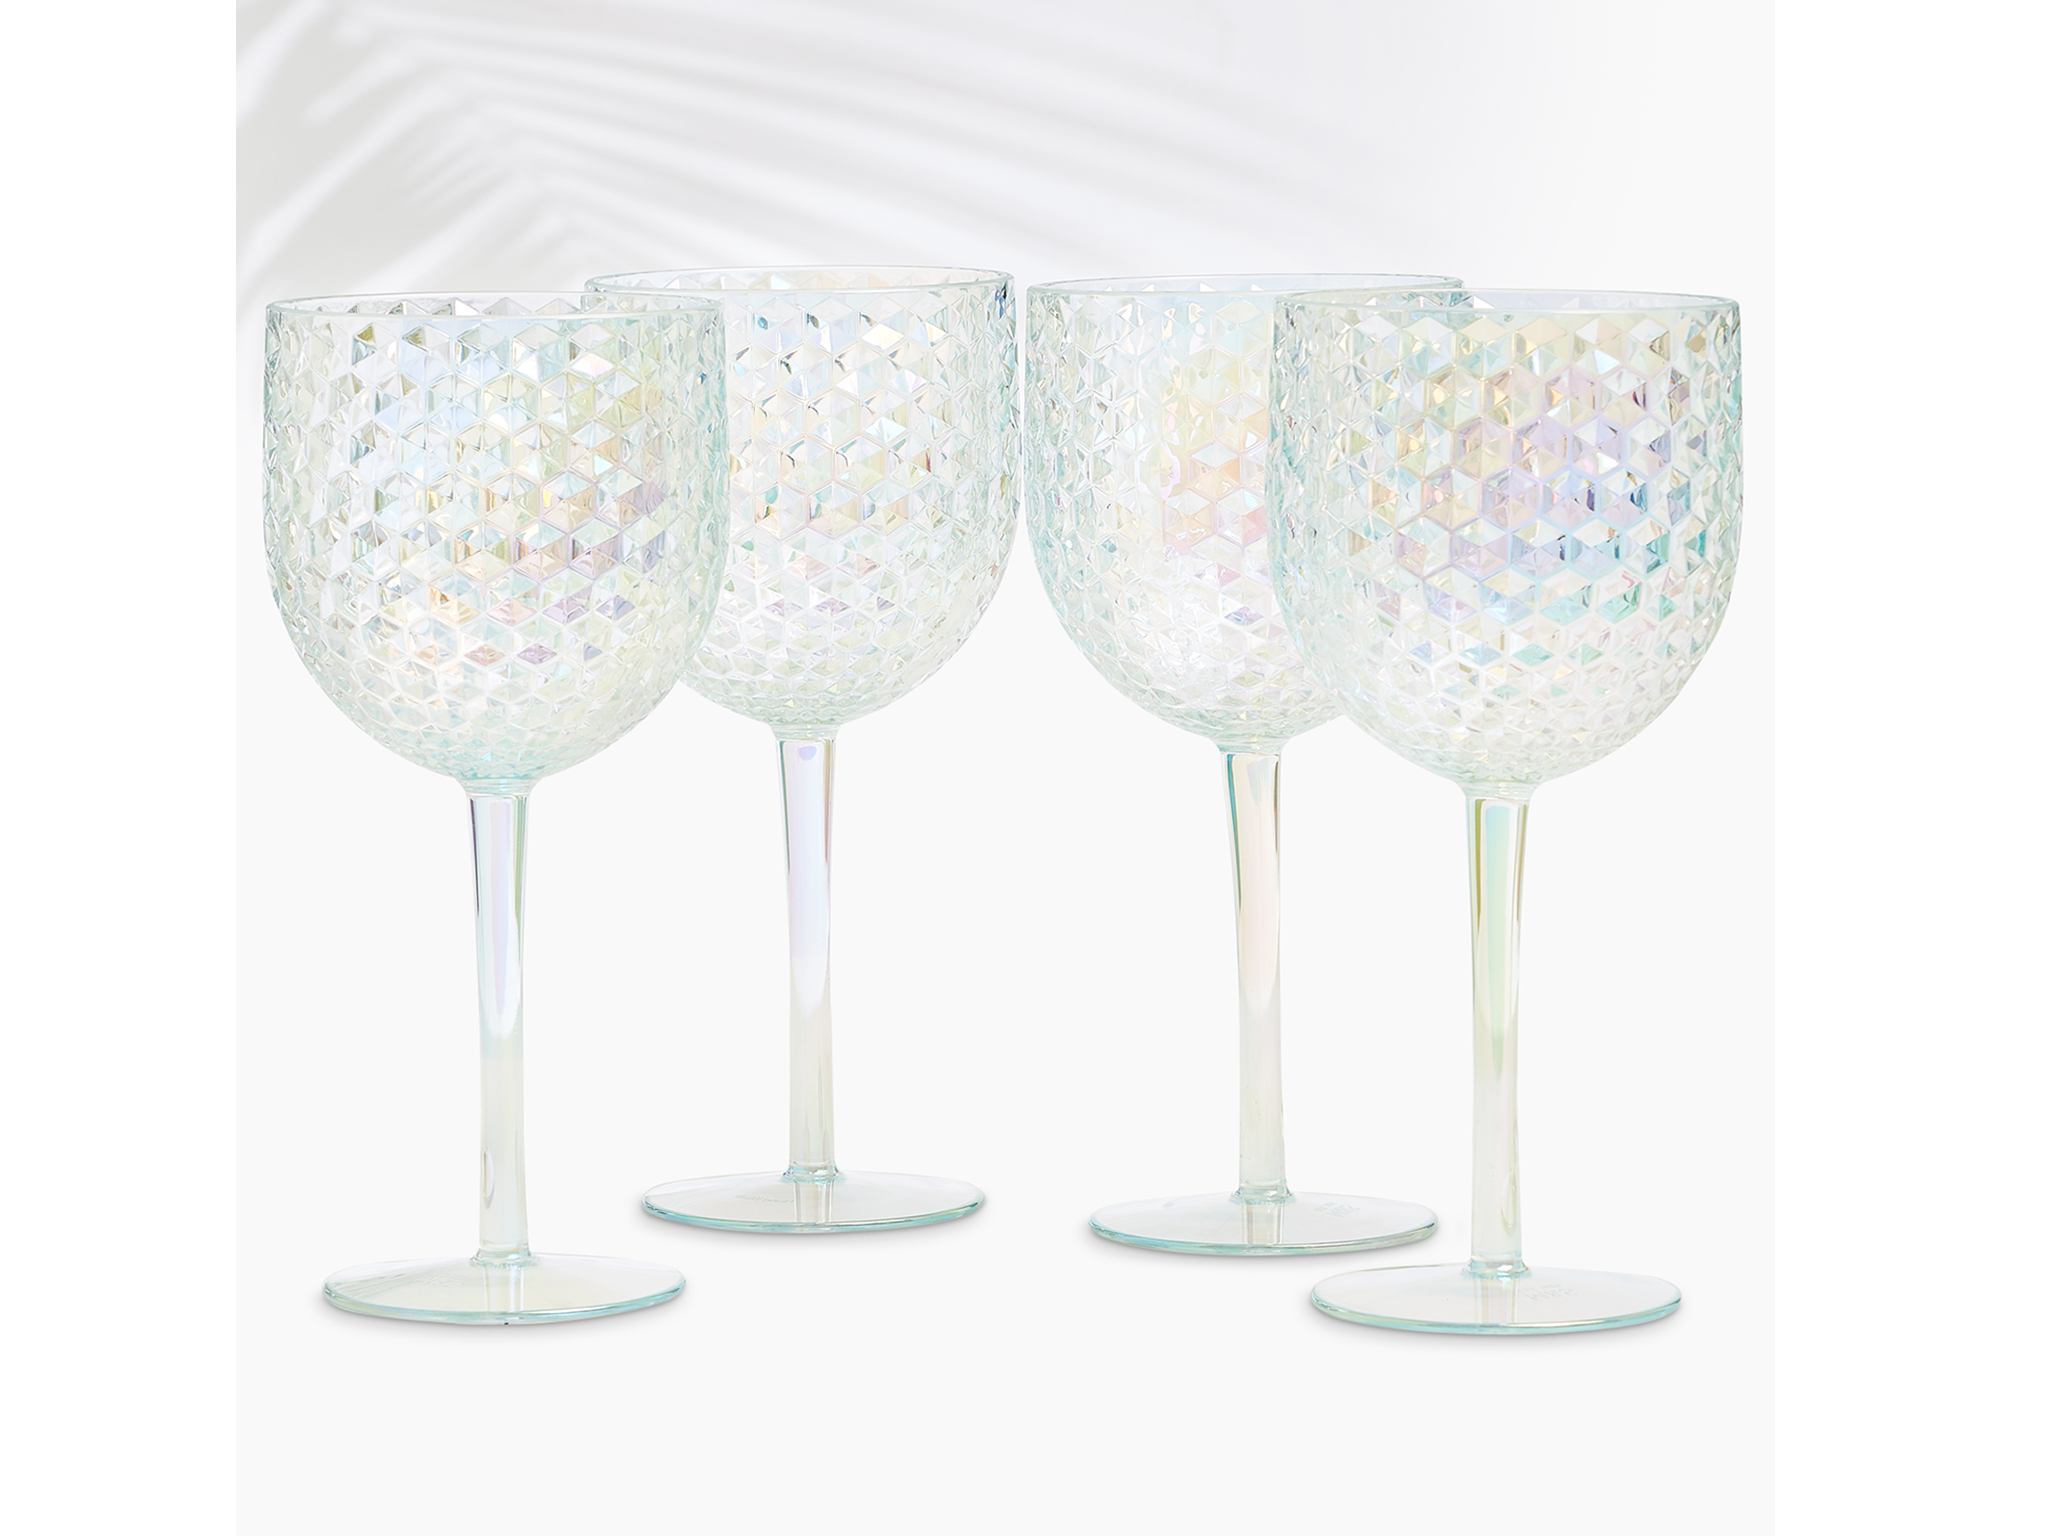 M&S lustre picnic wine glasses.png